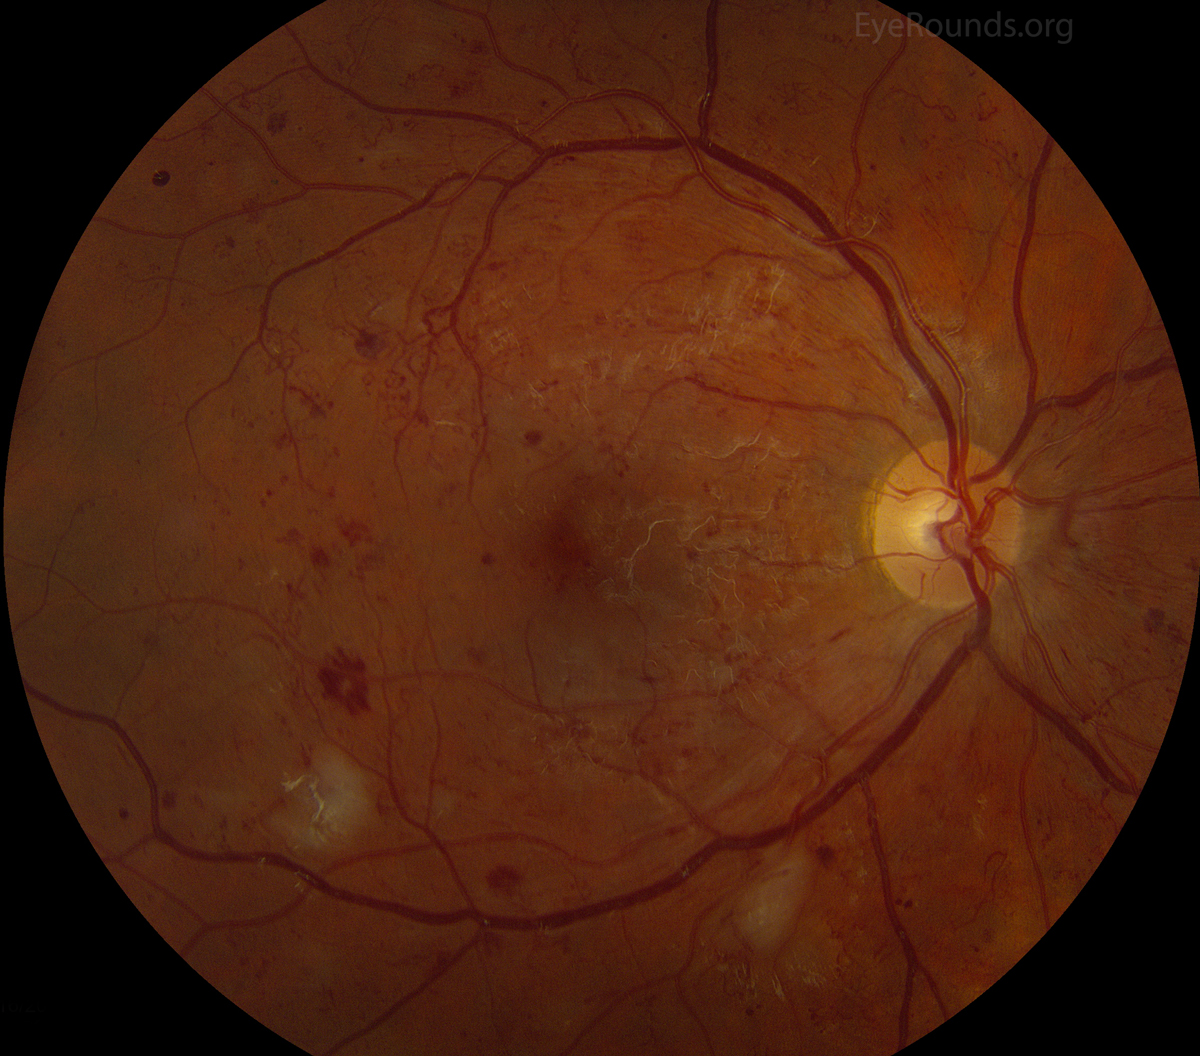 diabetic patient with severe non-proliferative diabetic retinopathy